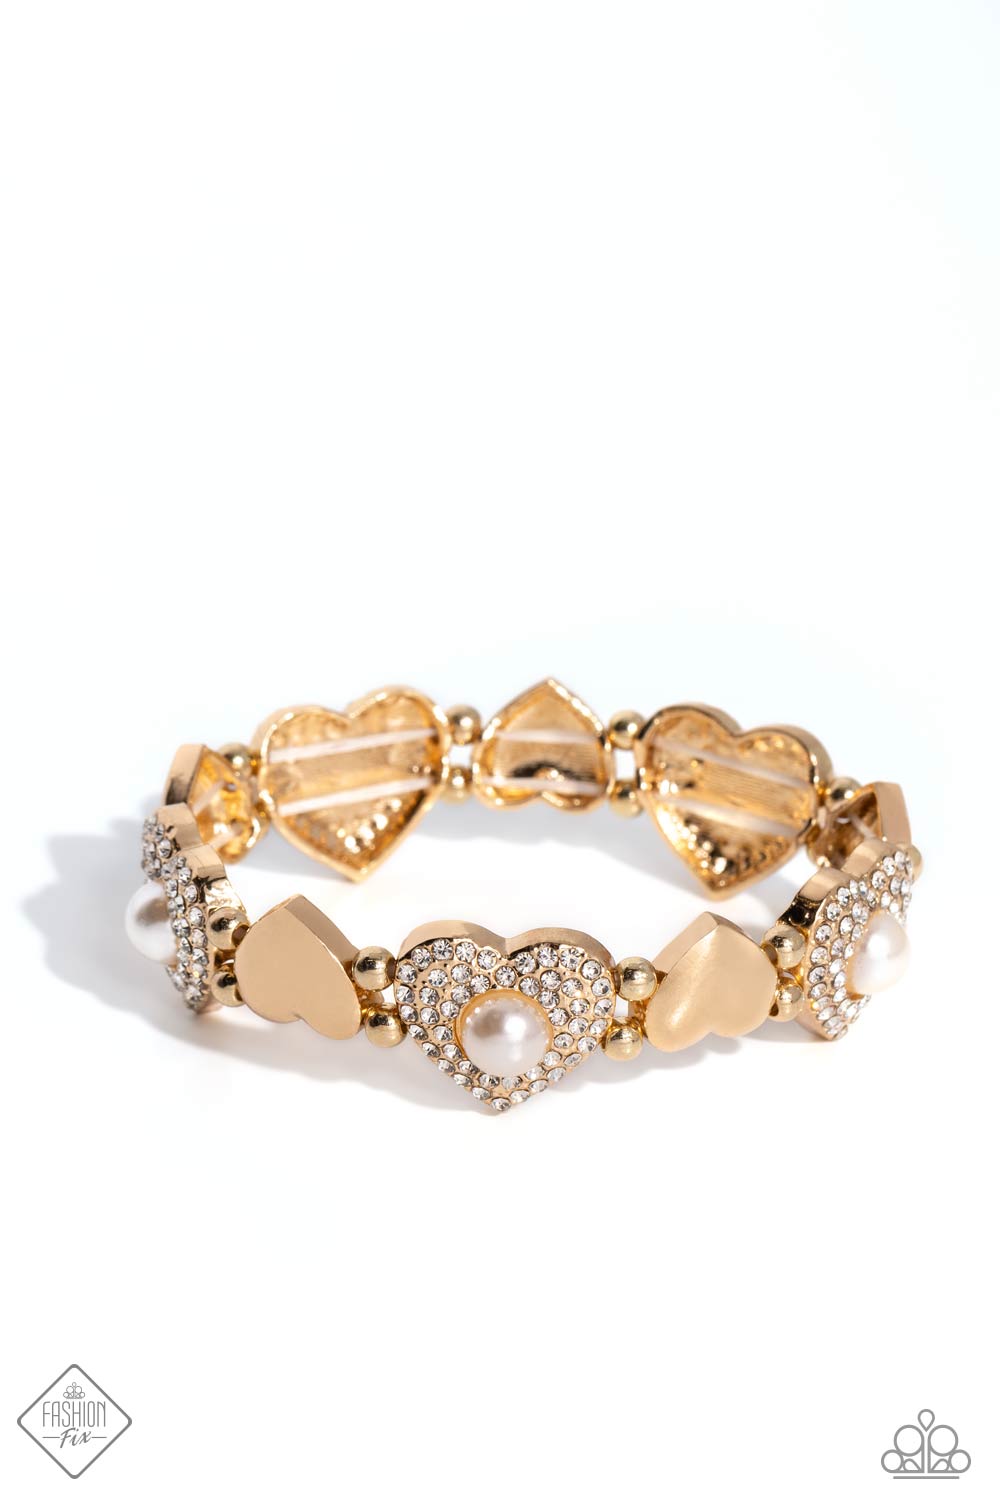 Heartfelt Heirloom - gold - Paparazzi bracelet